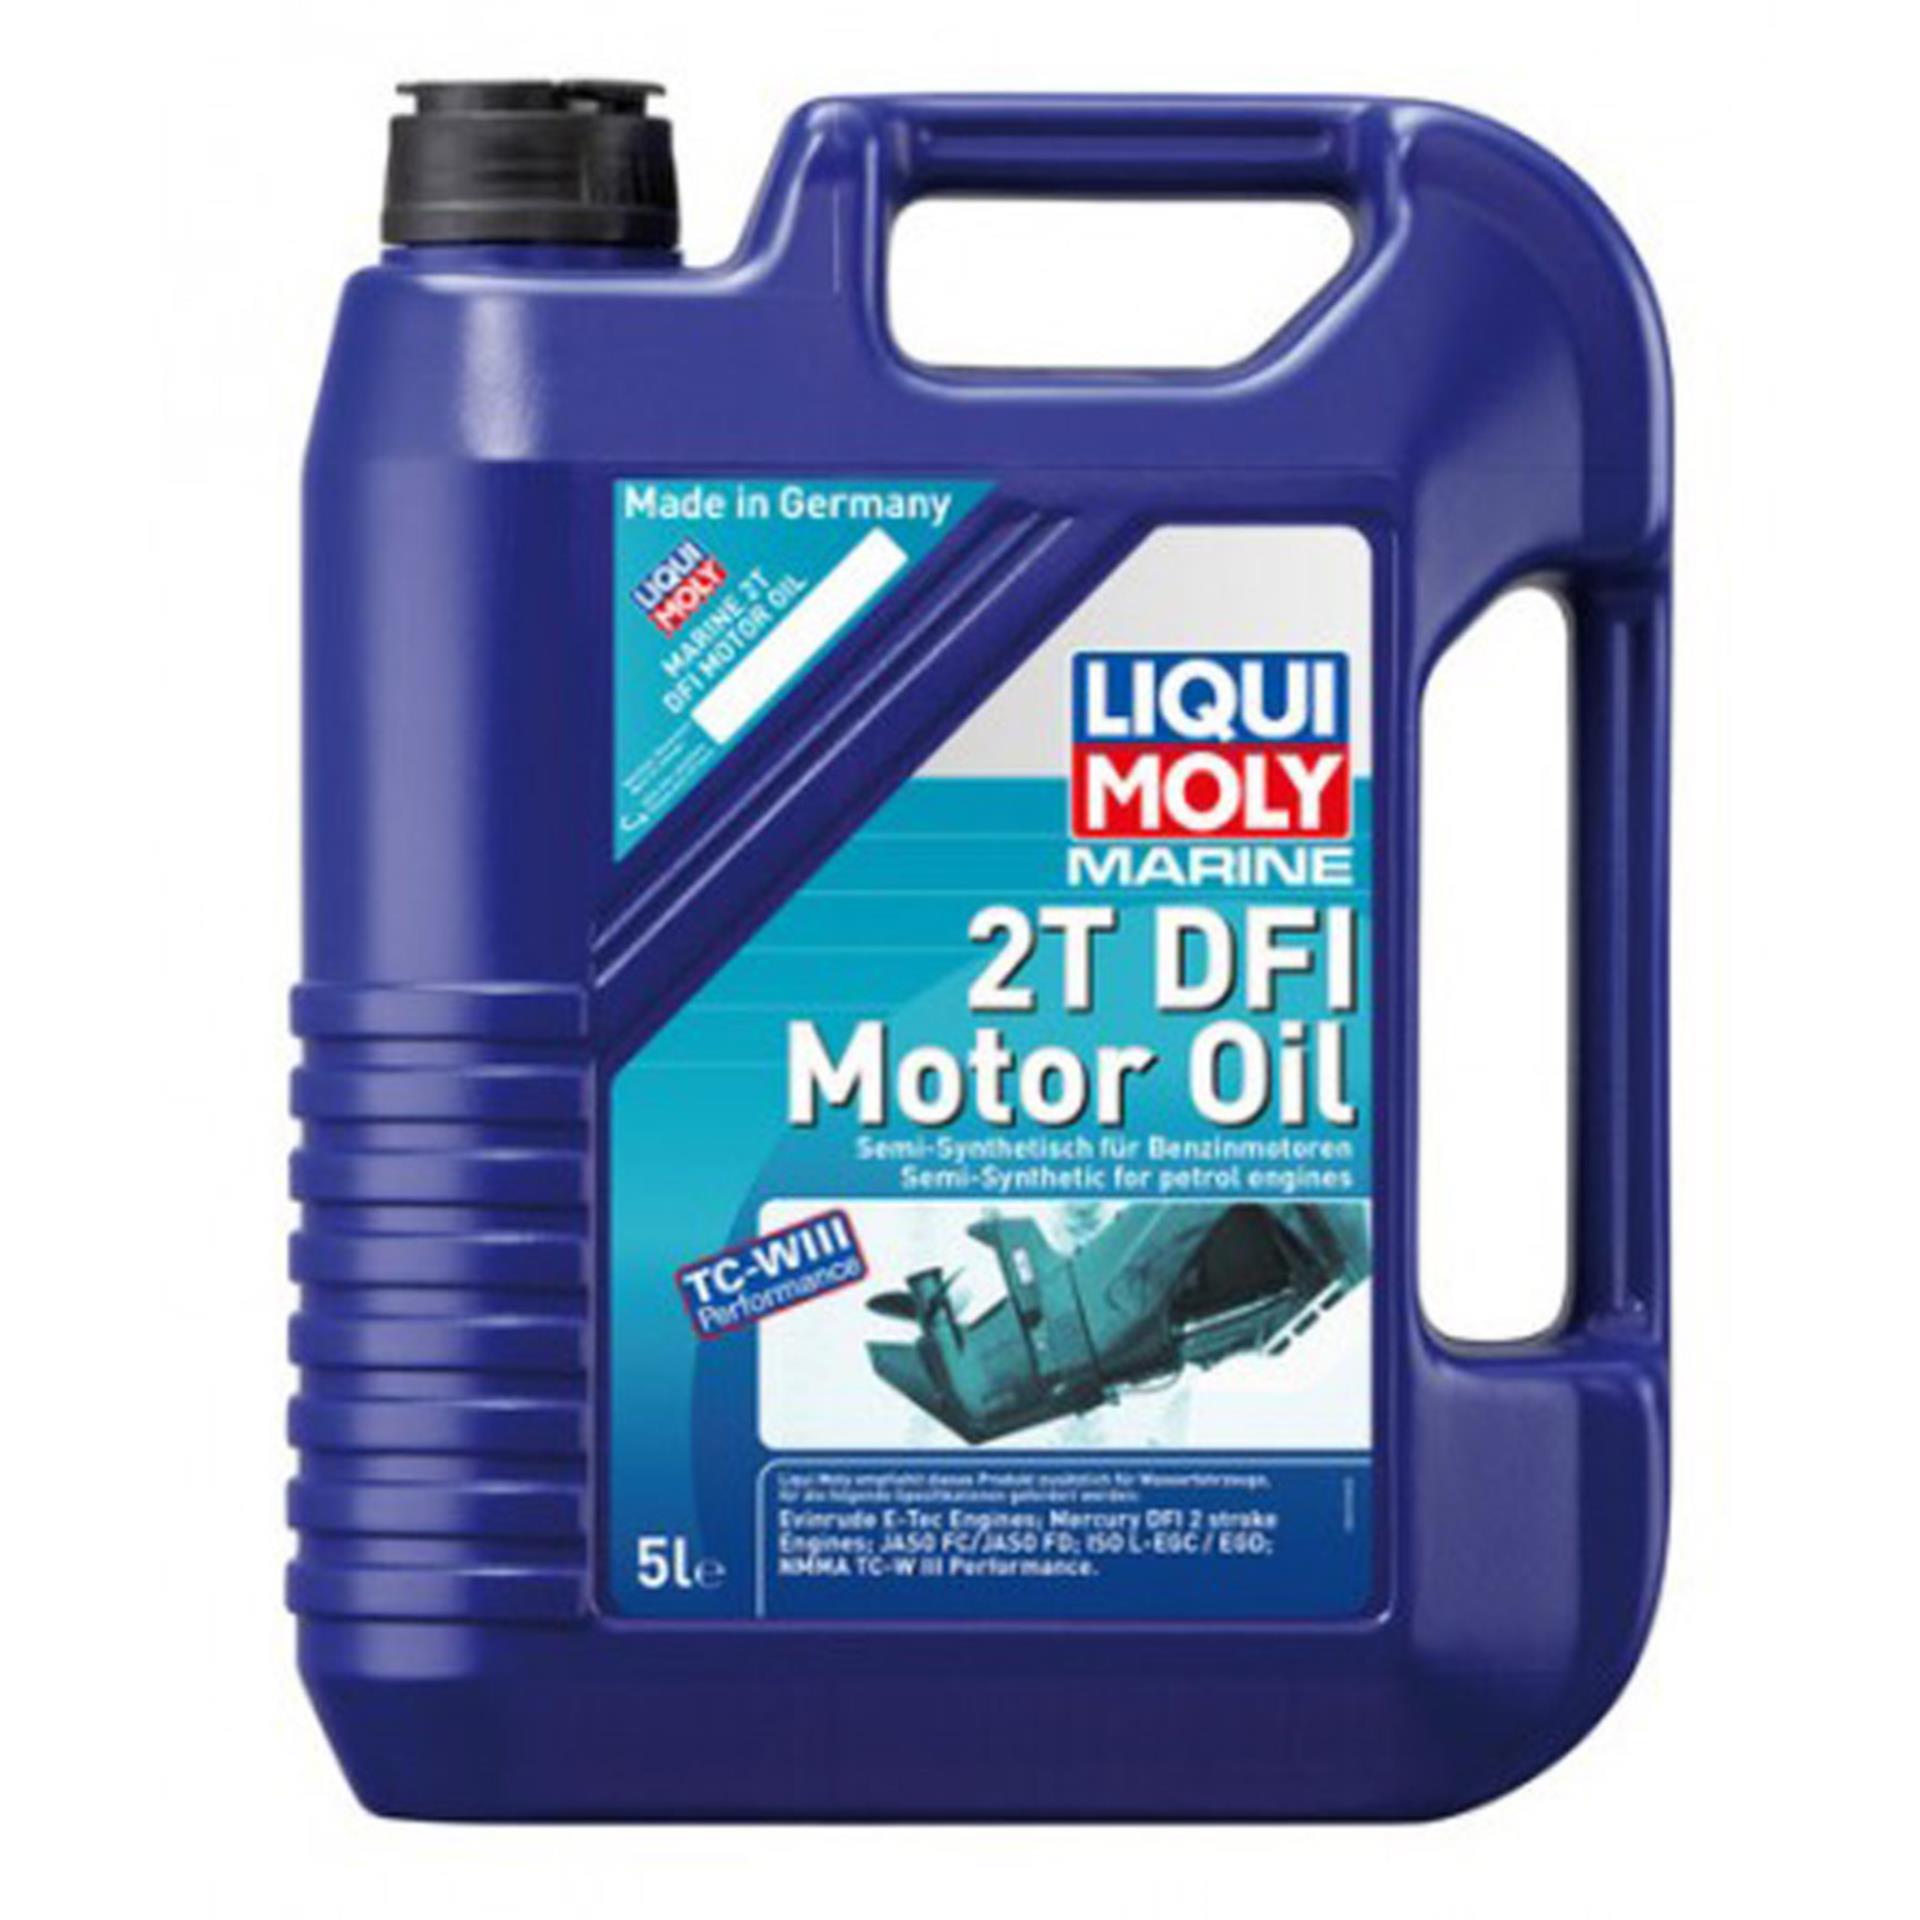 Liqui Moly 2T DFI Motor Oil 5l